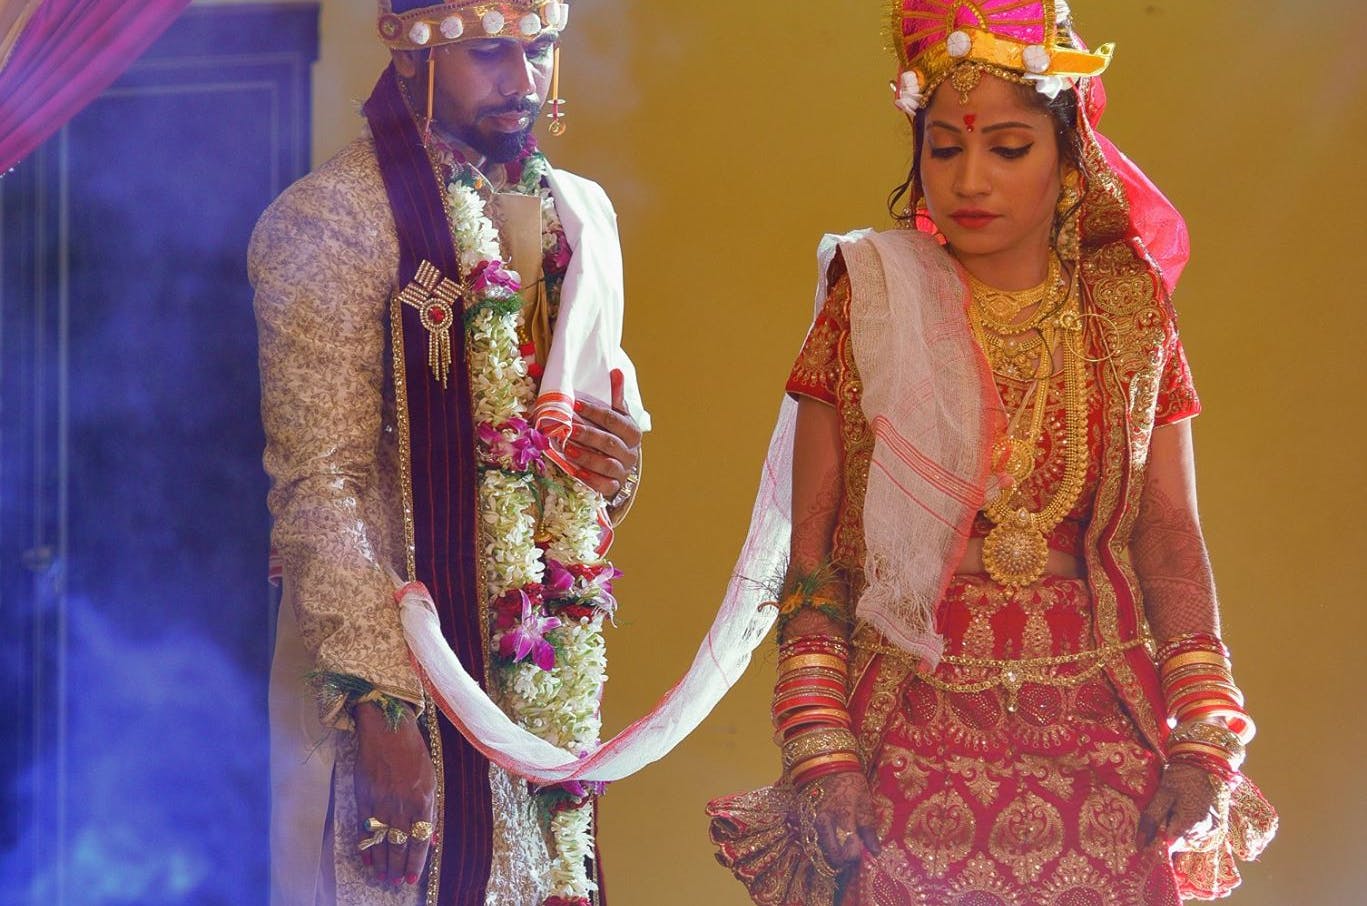 Saptapadi: The Vows Of The Bride And Groom